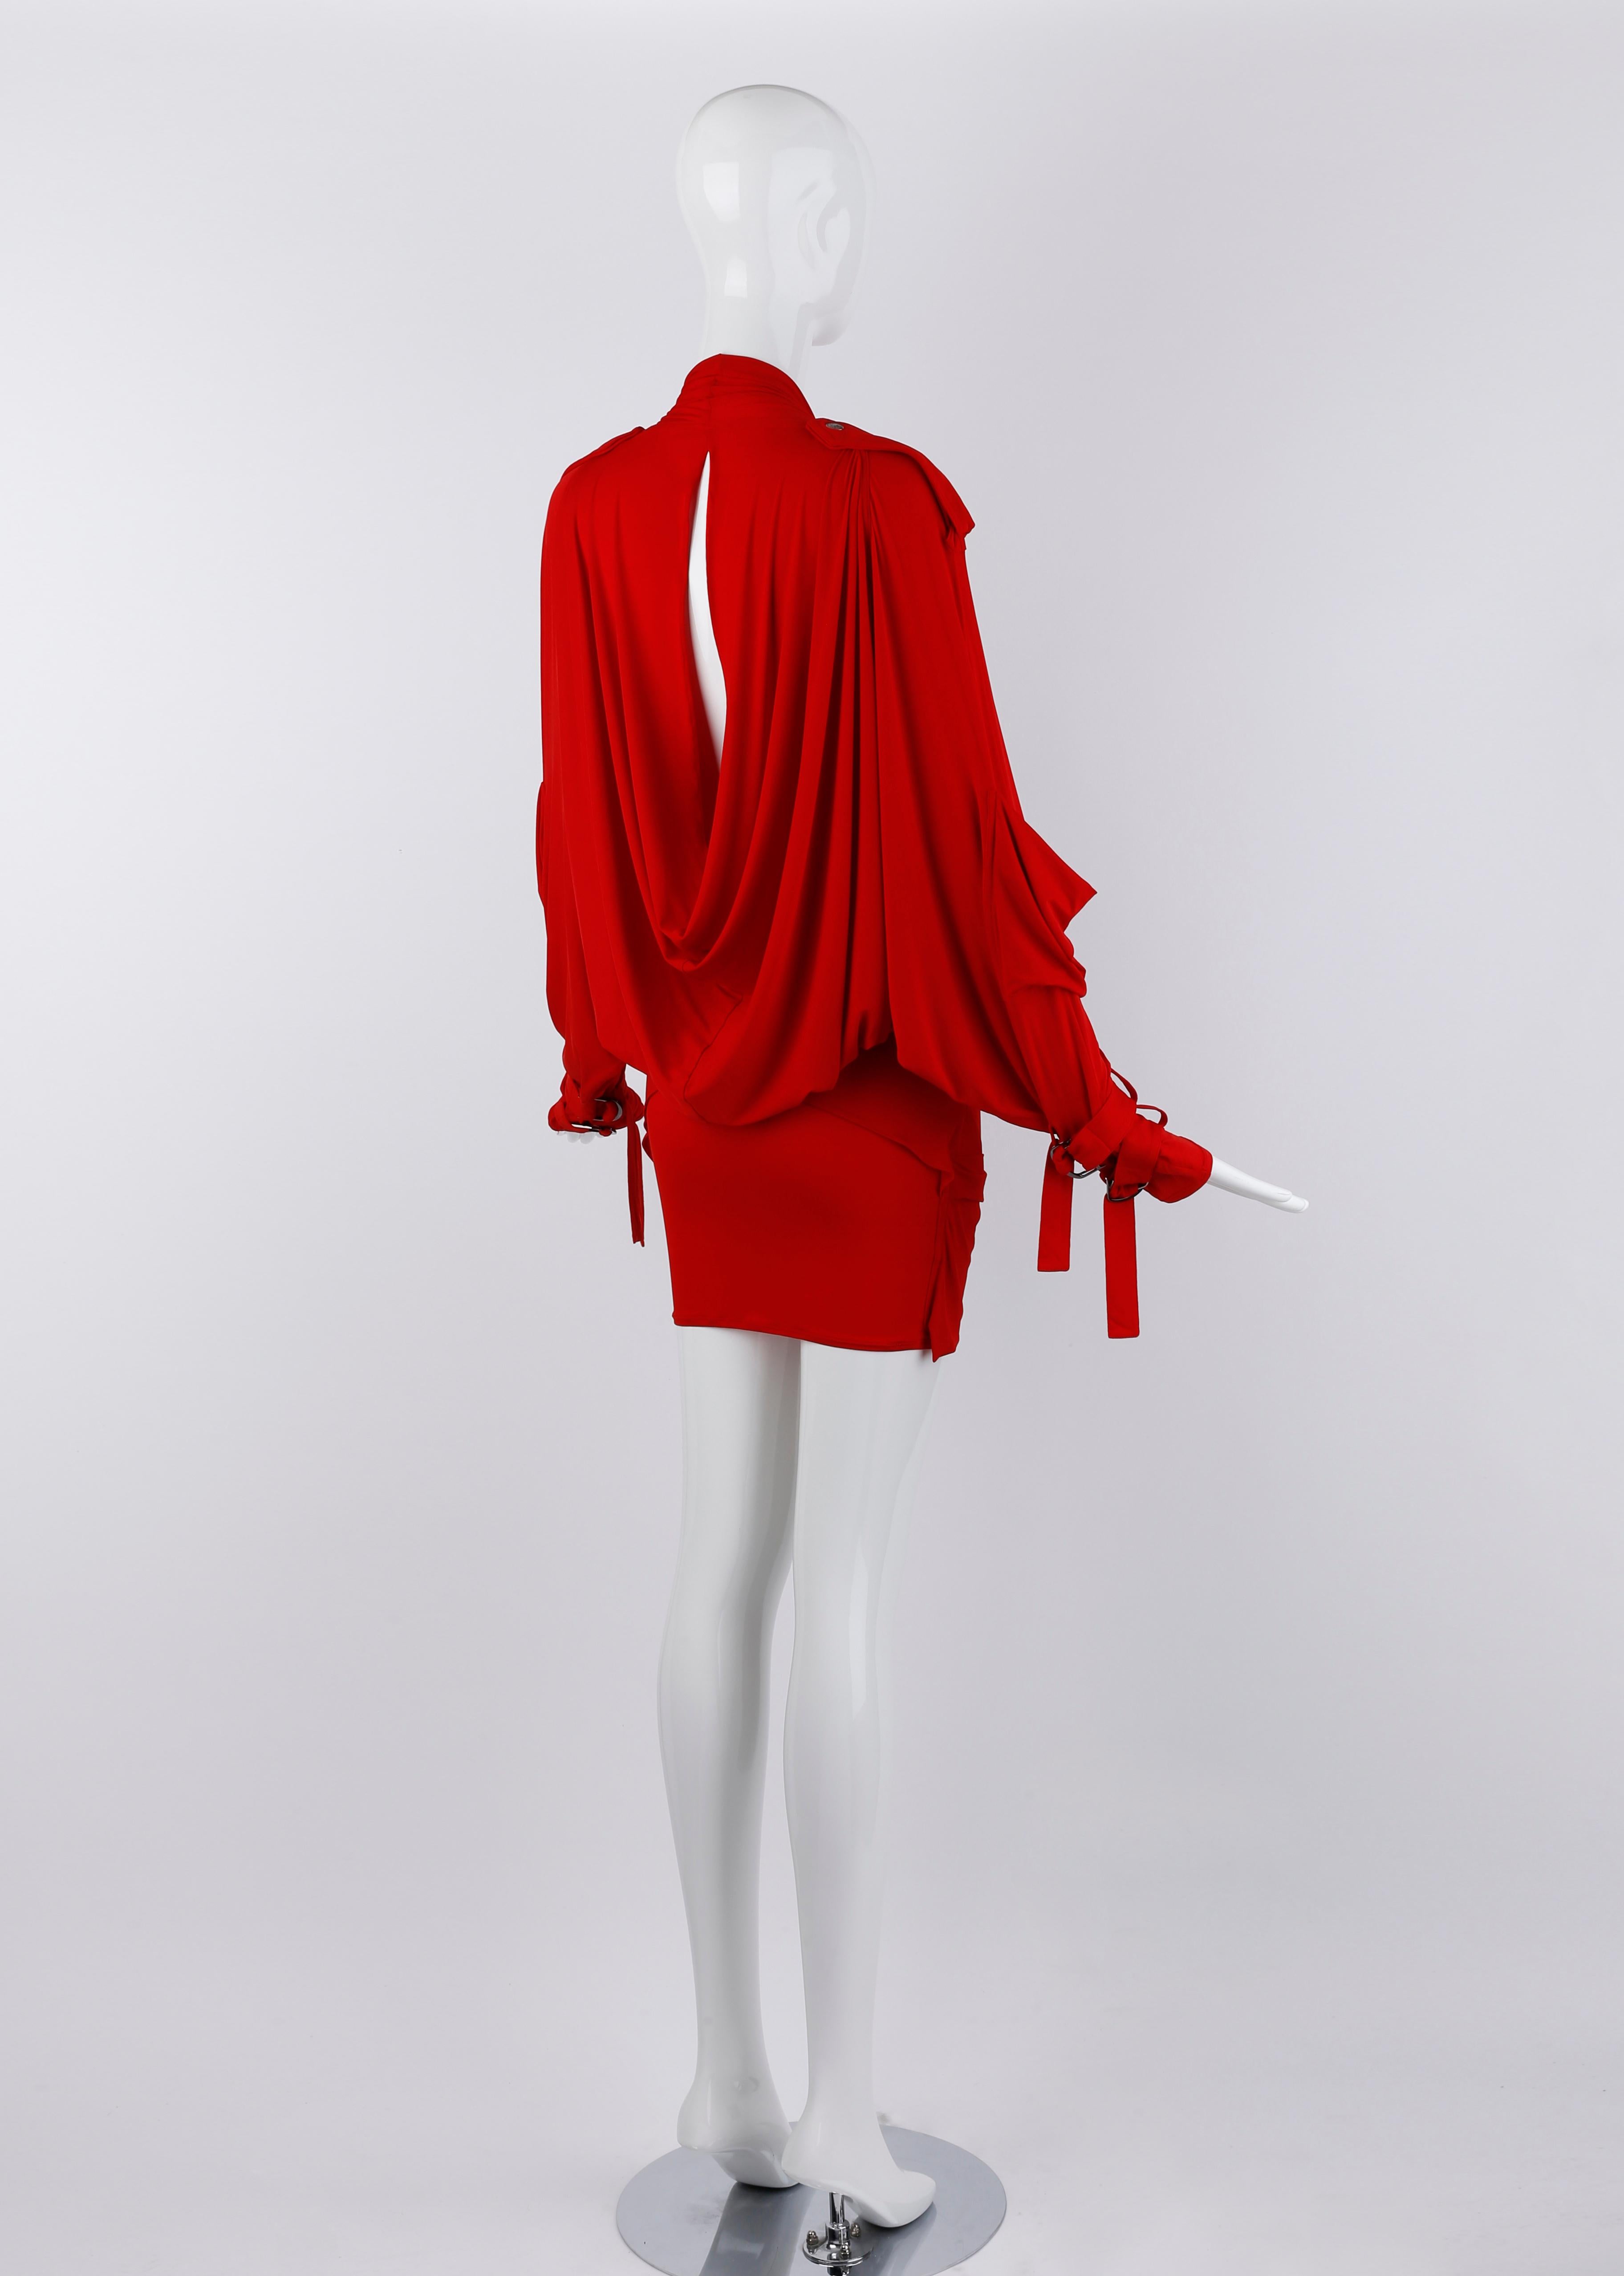 Christian Dior John Galliano S/S 2003 Red Plunge Draped Pocket Mini Dress For Sale 2